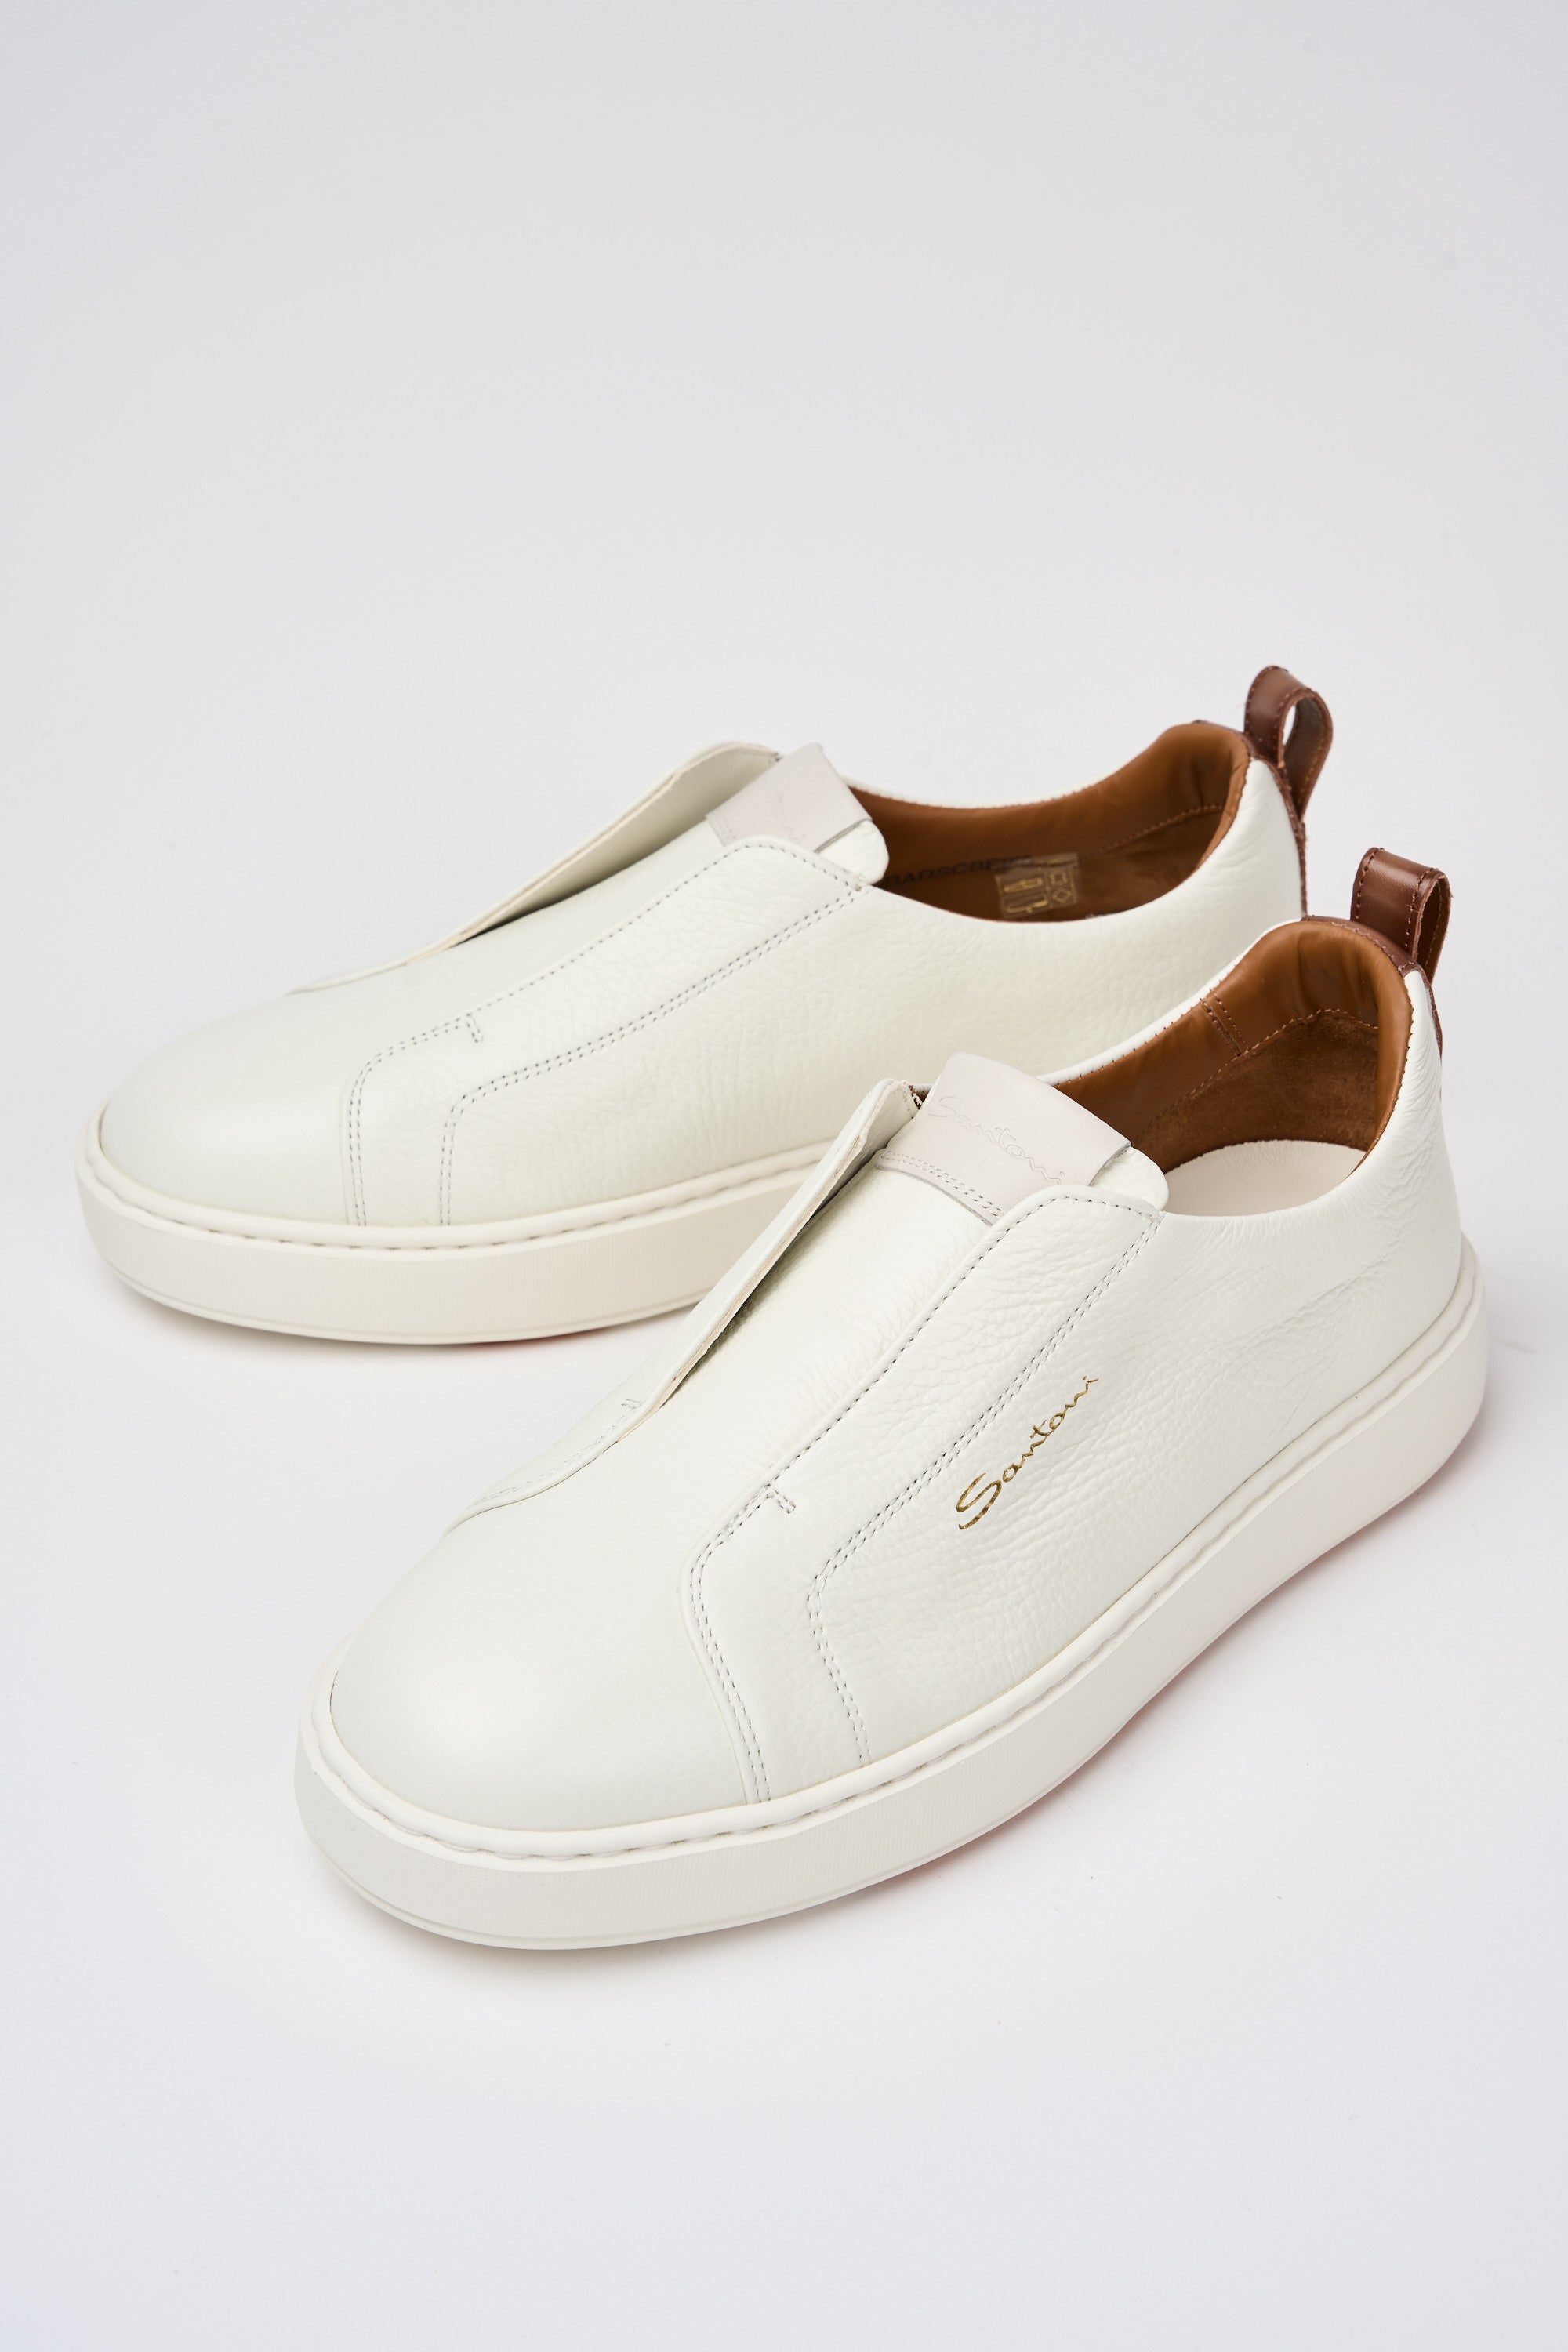 Santoni Slip-On-Sneakers aus weißem Leder-6